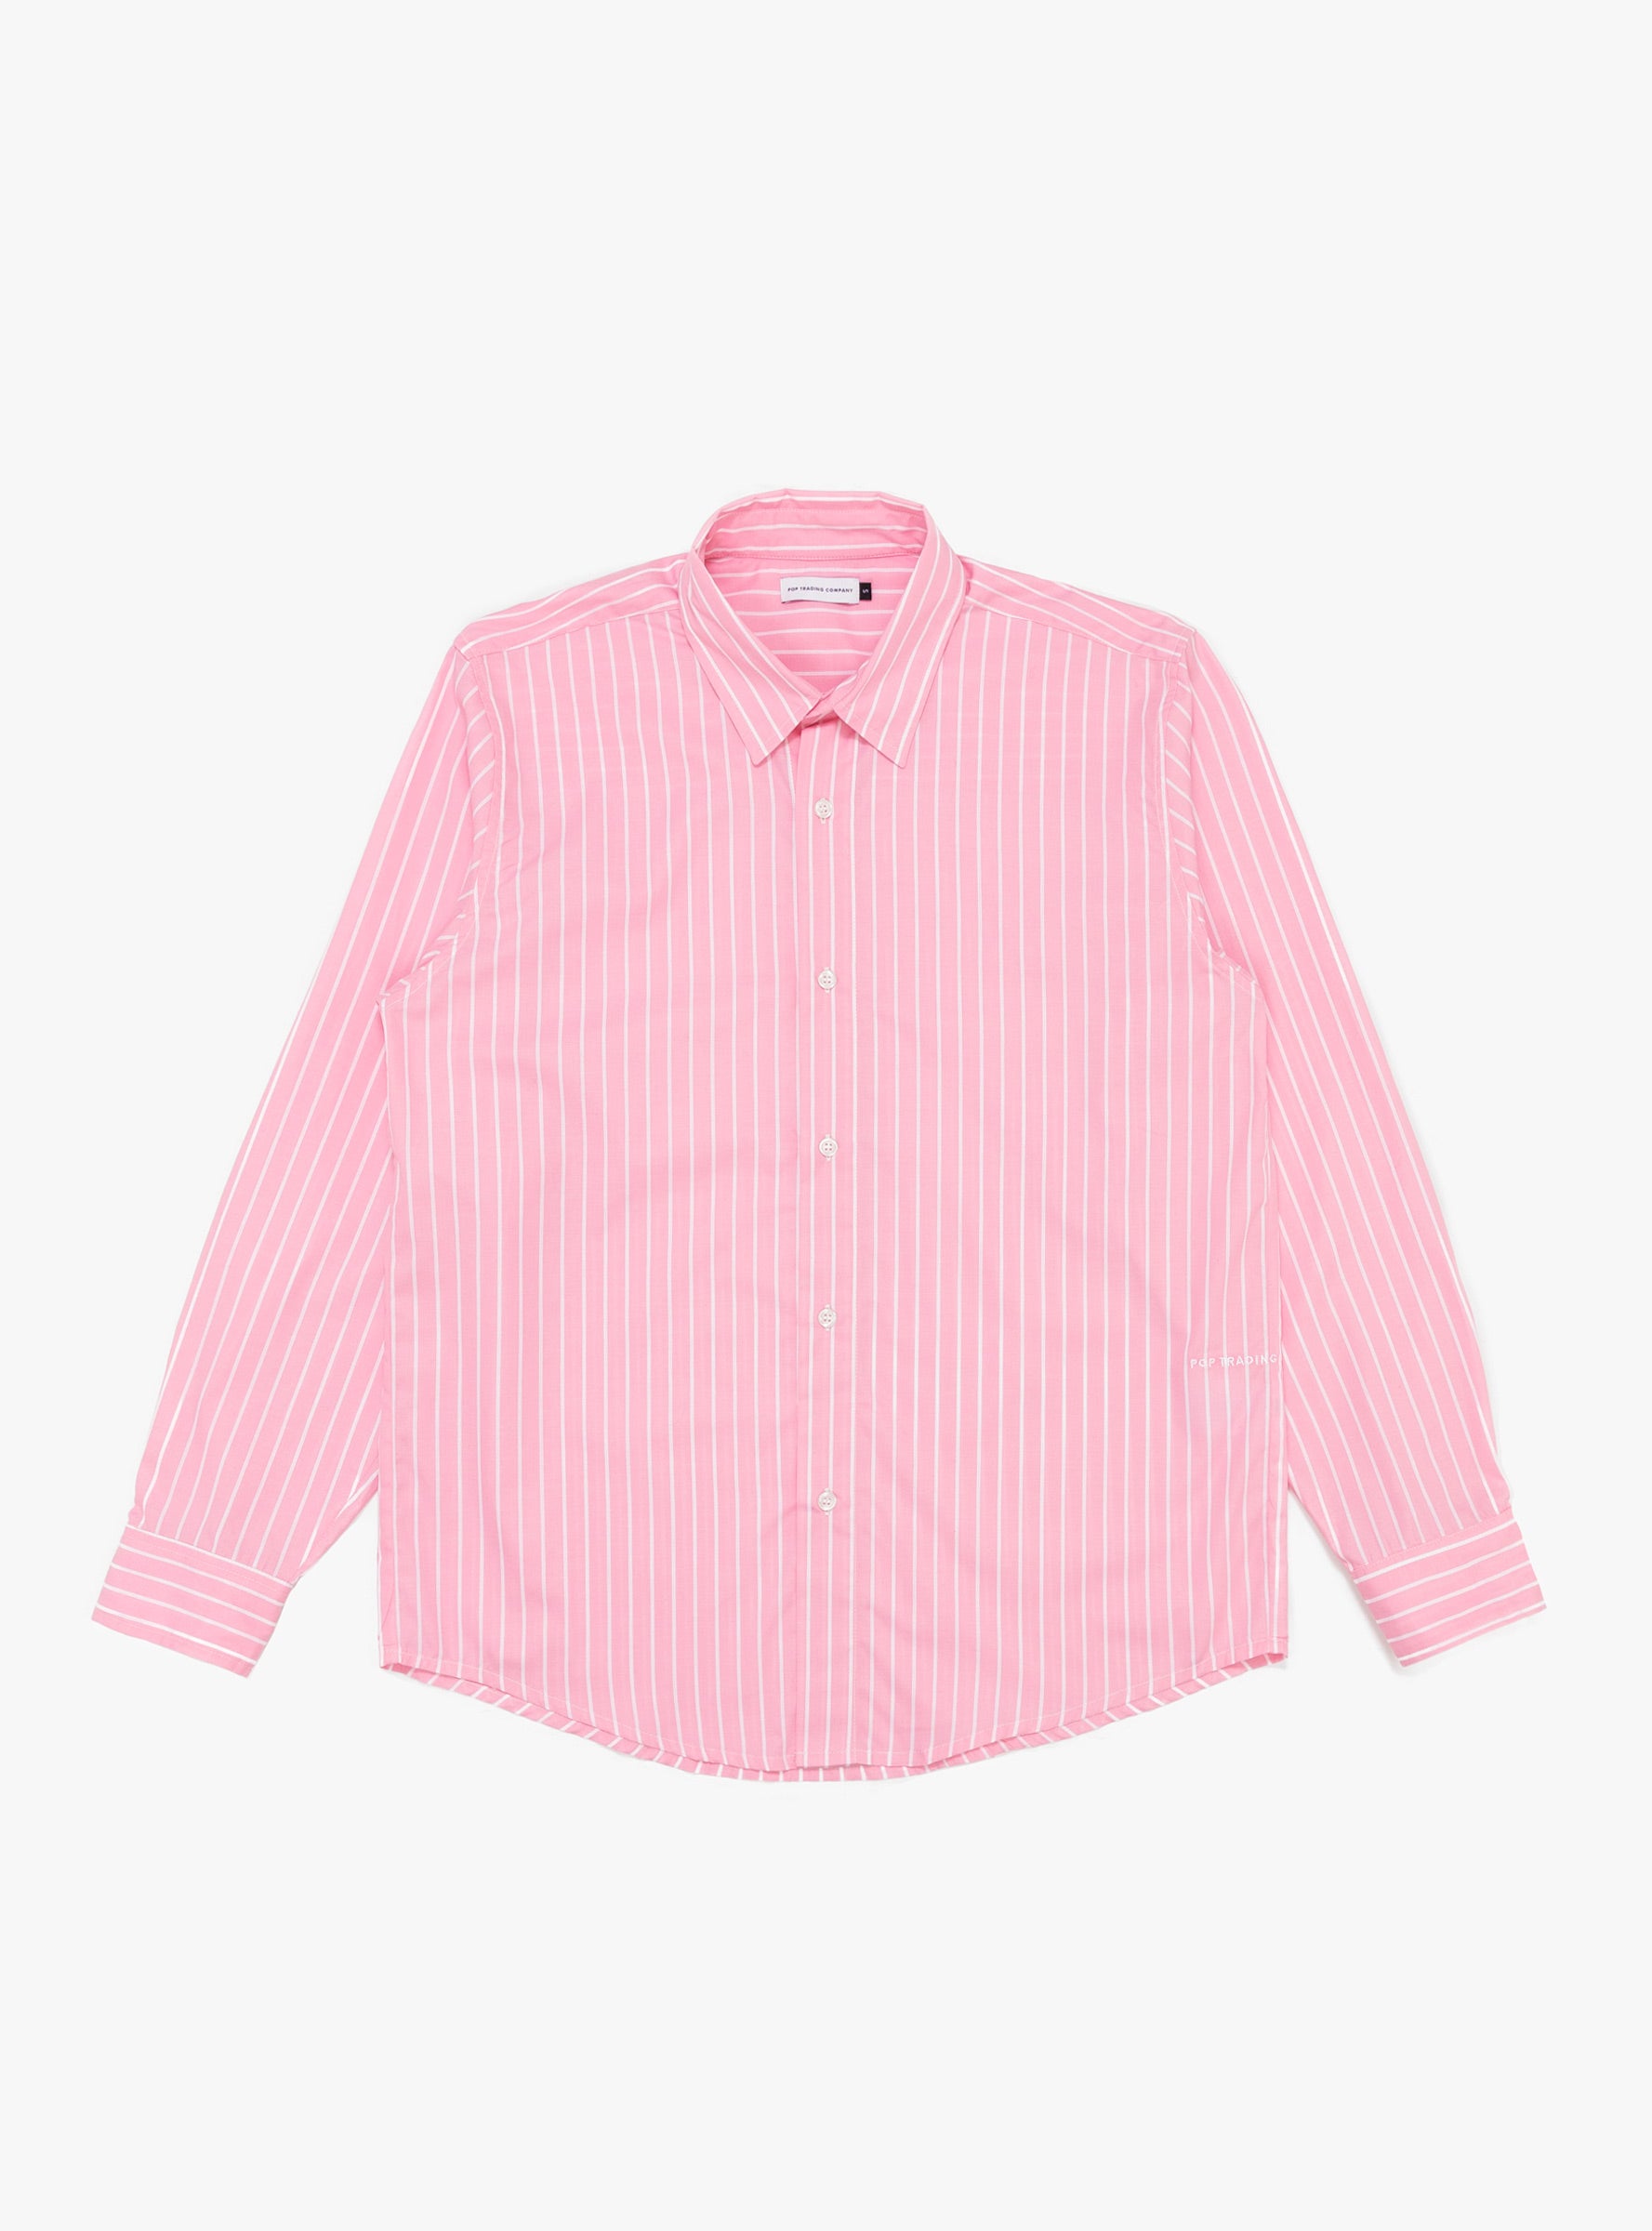 Pop Trading Company Pop Trading Company Logo Striped Shirt Pink - Size: XL